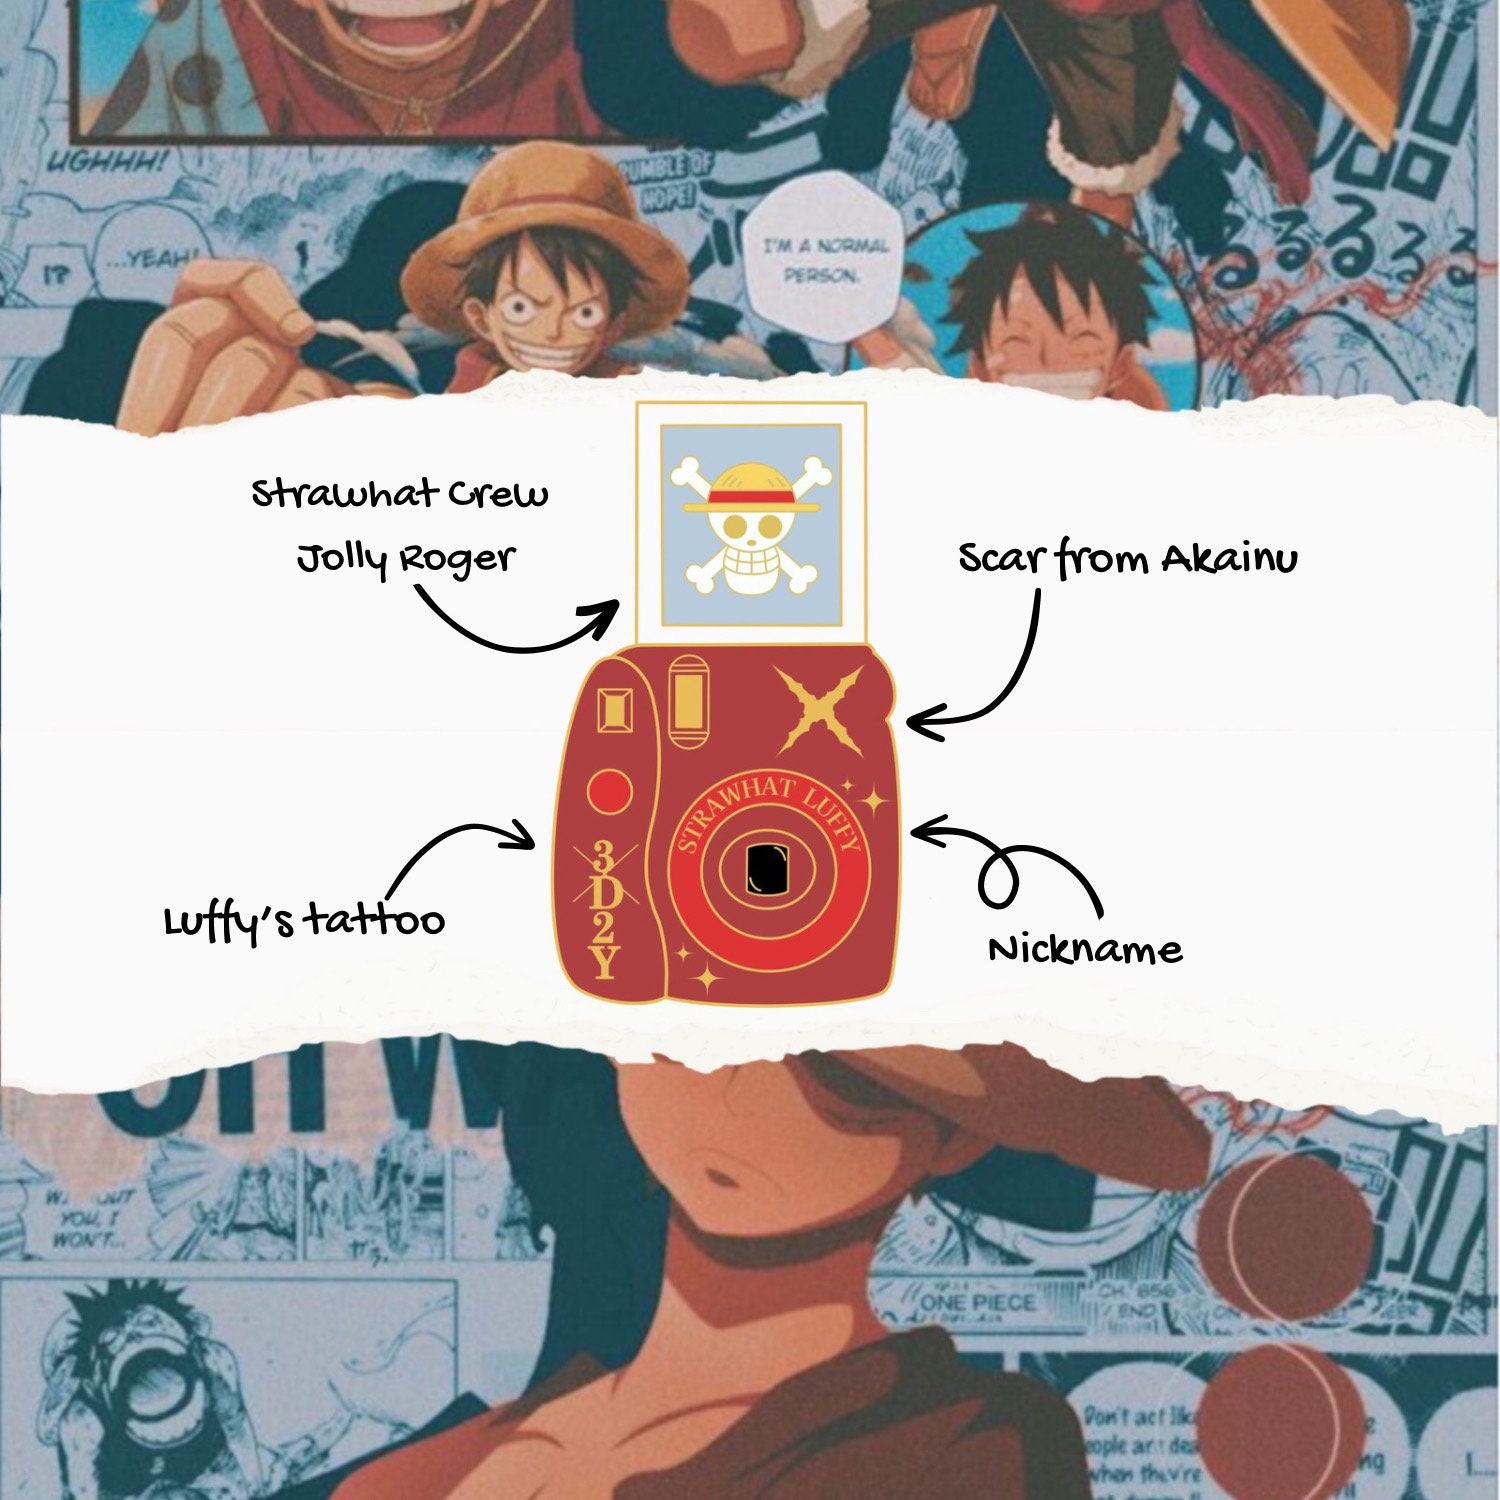 One Piece Aesthetic - Doflamingo Aesthetic  One piece anime, One piece  aesthetic, Nerd fashion